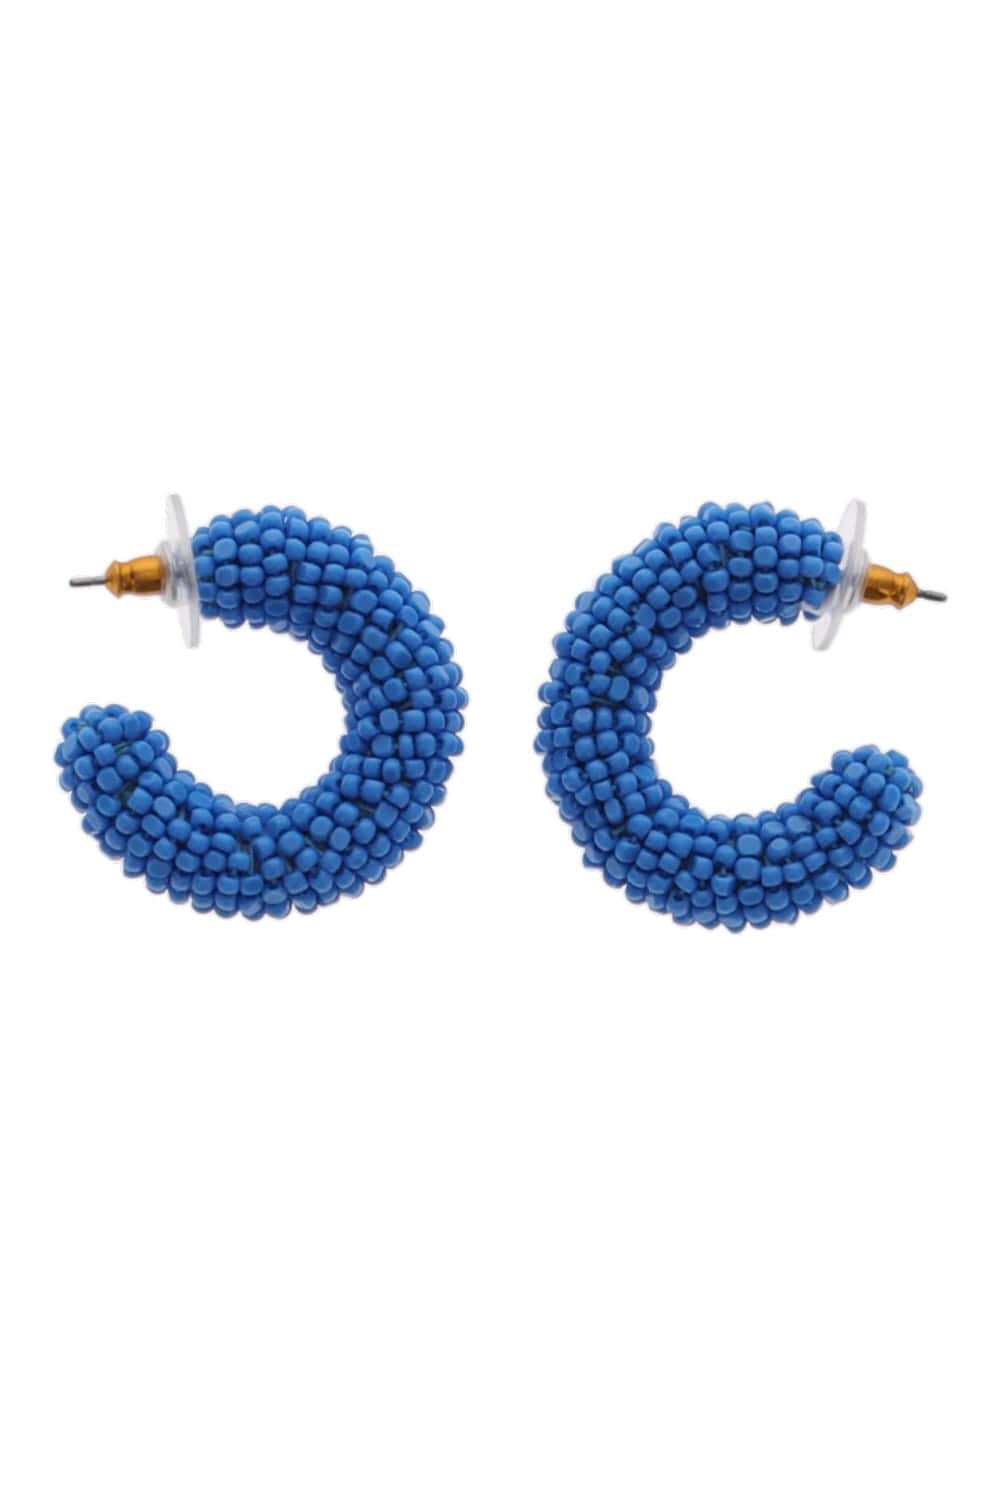 Mignonne Gavigan Fatima Blue Beaded Hoop Earrings